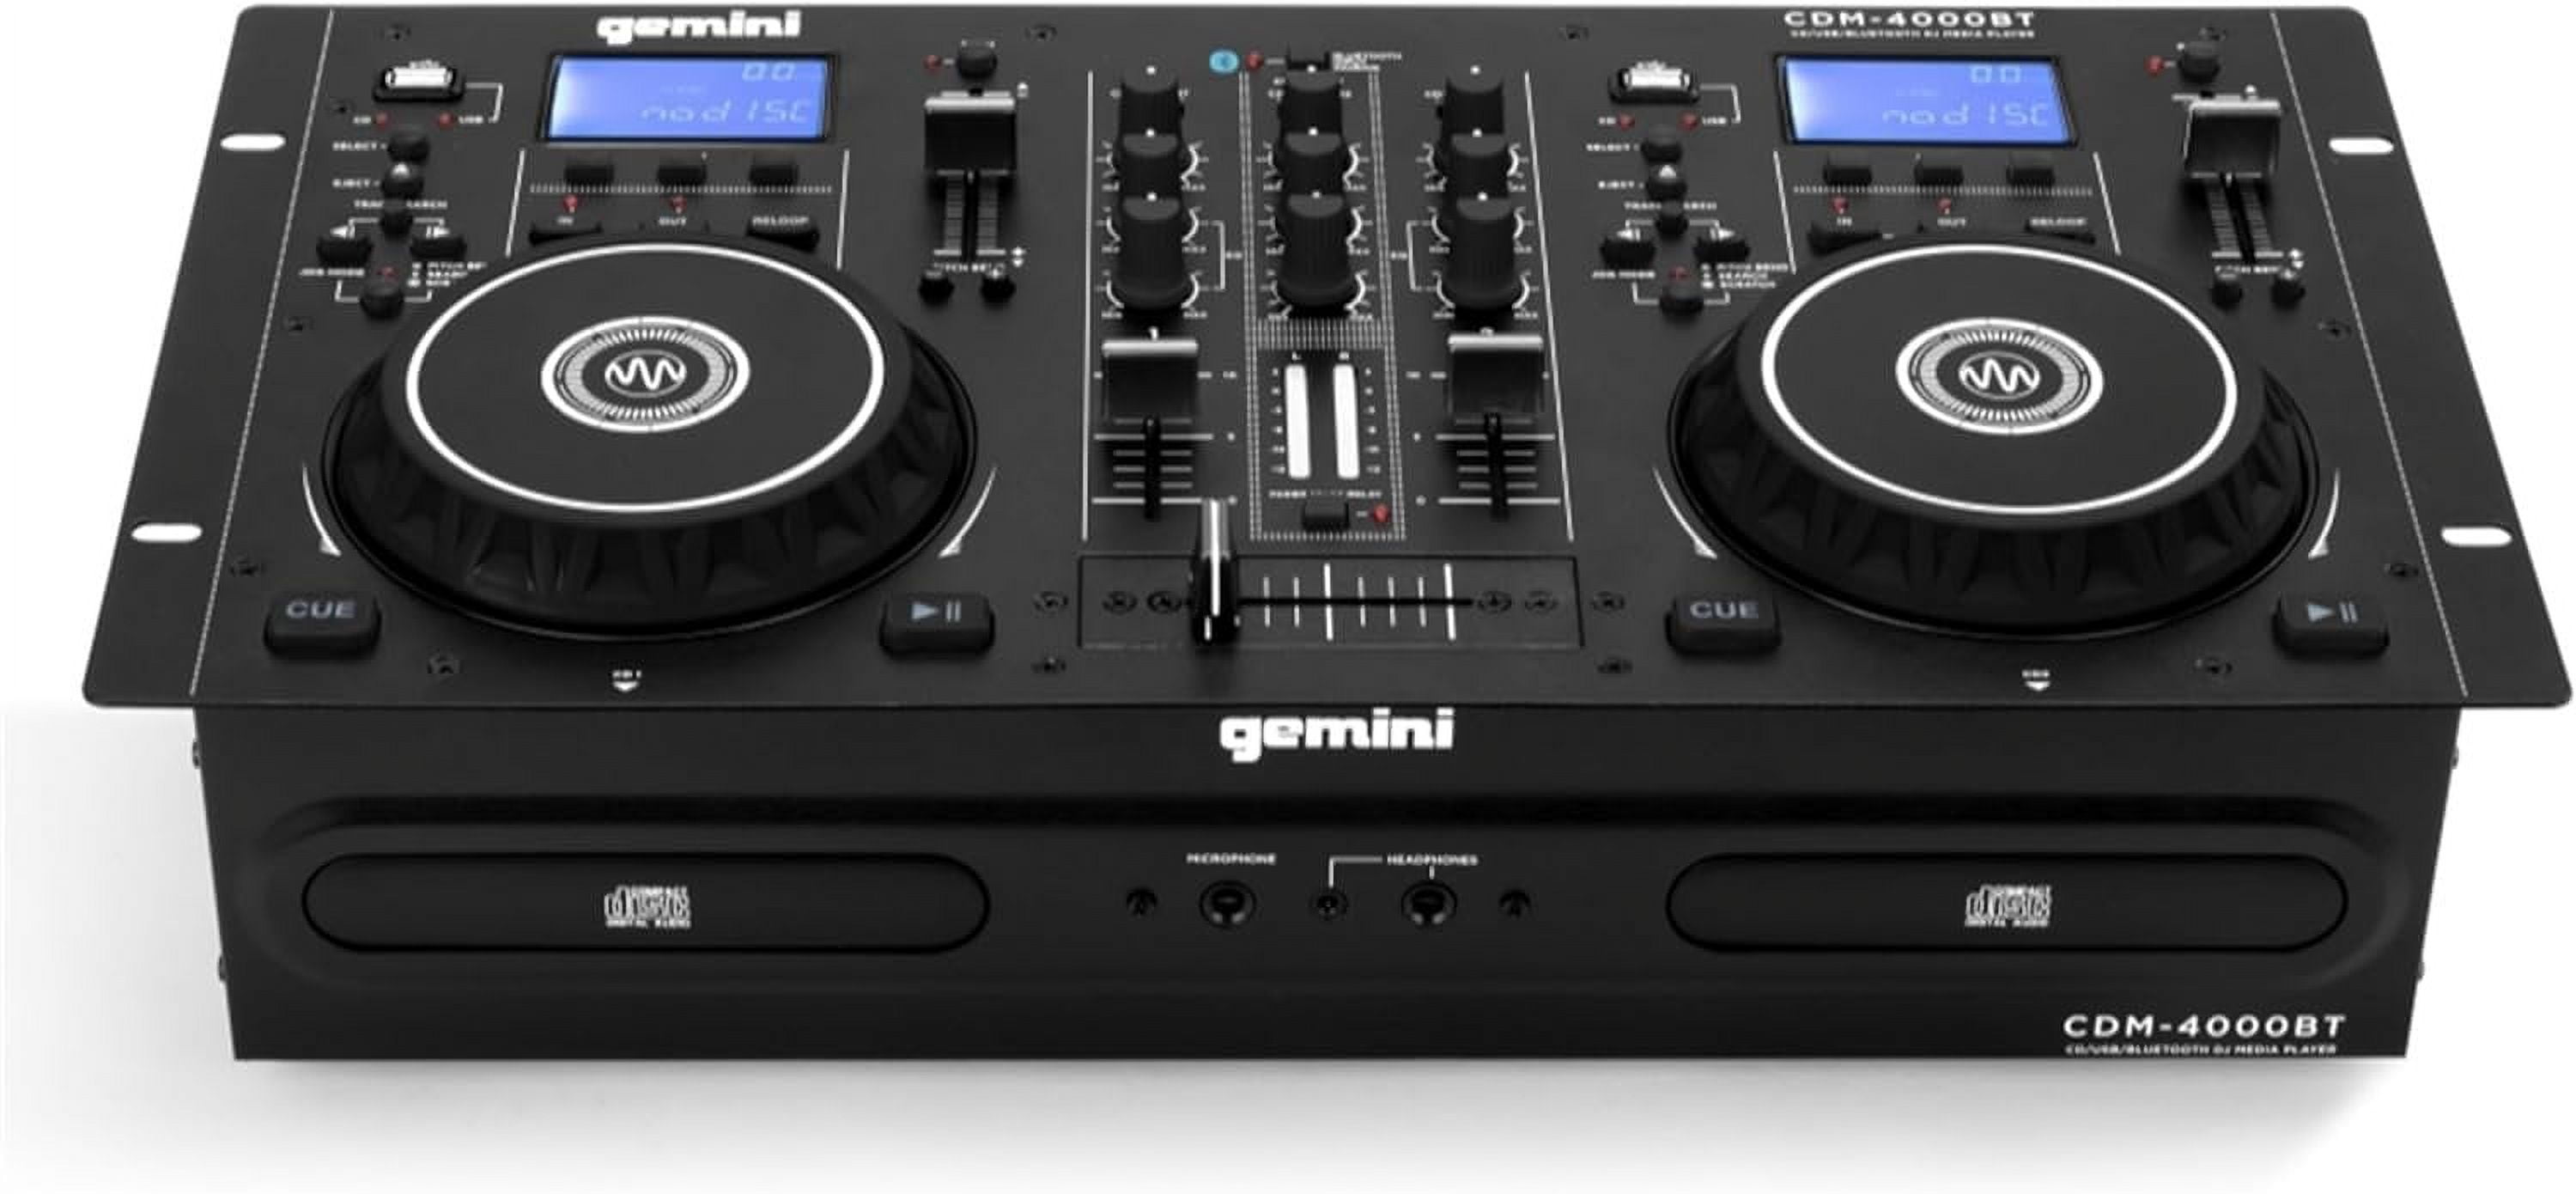 Gemini CDM-4000BT Dual DJ CD/USB Media Player with Bluetooth + Mixer